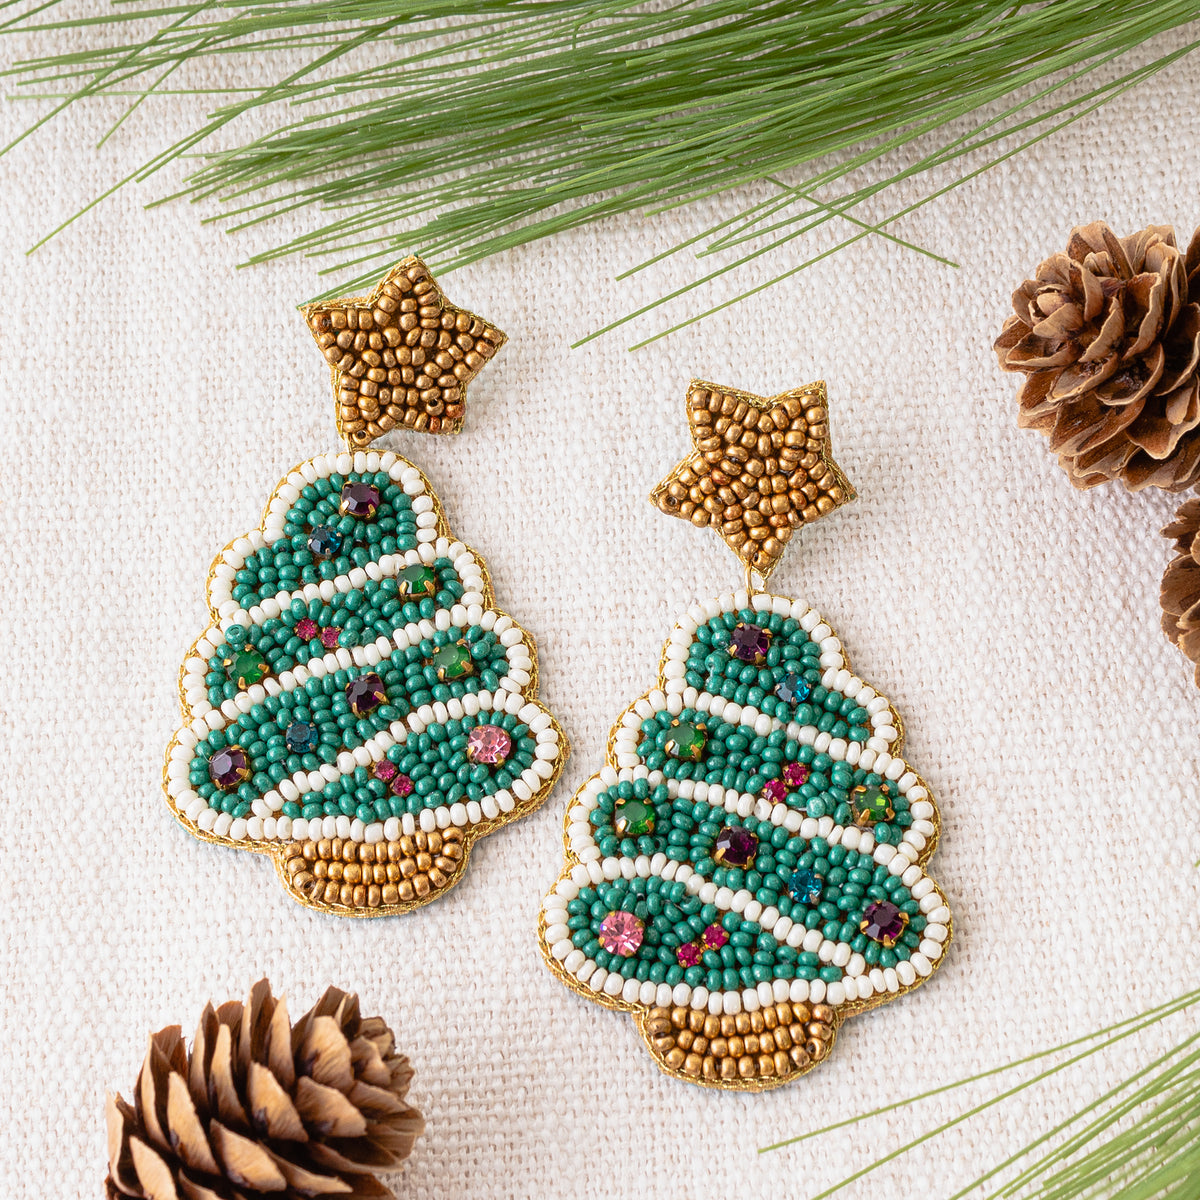 CH-01 - Beaded Christmas Tree Earrings - Green - Fashion Jewelry Wholesale